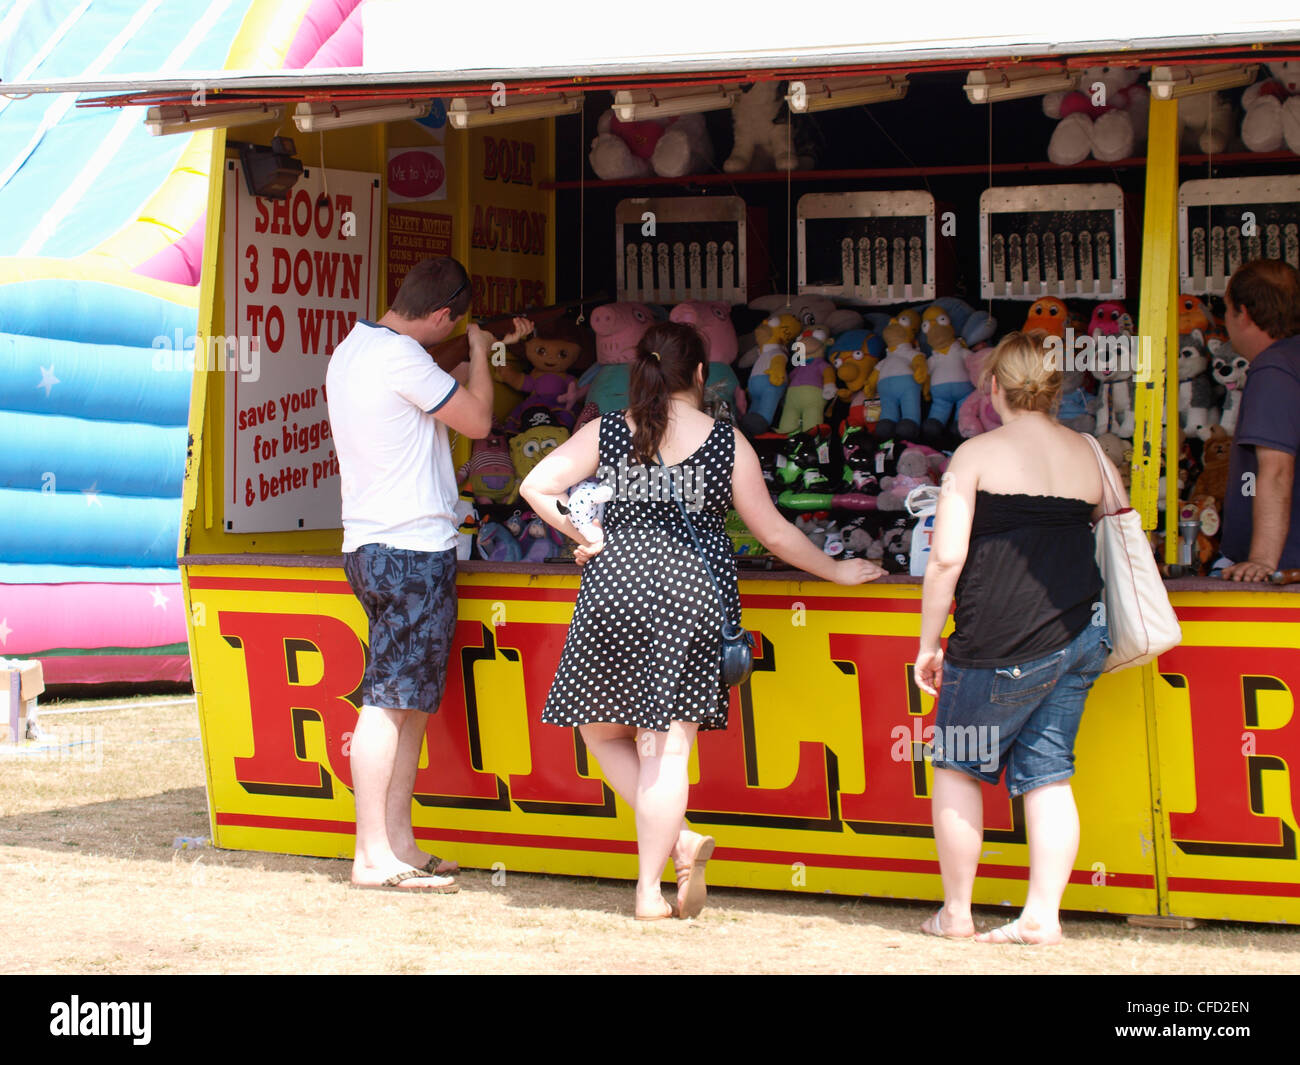 Shooting fairground stall, UK Stock Photo